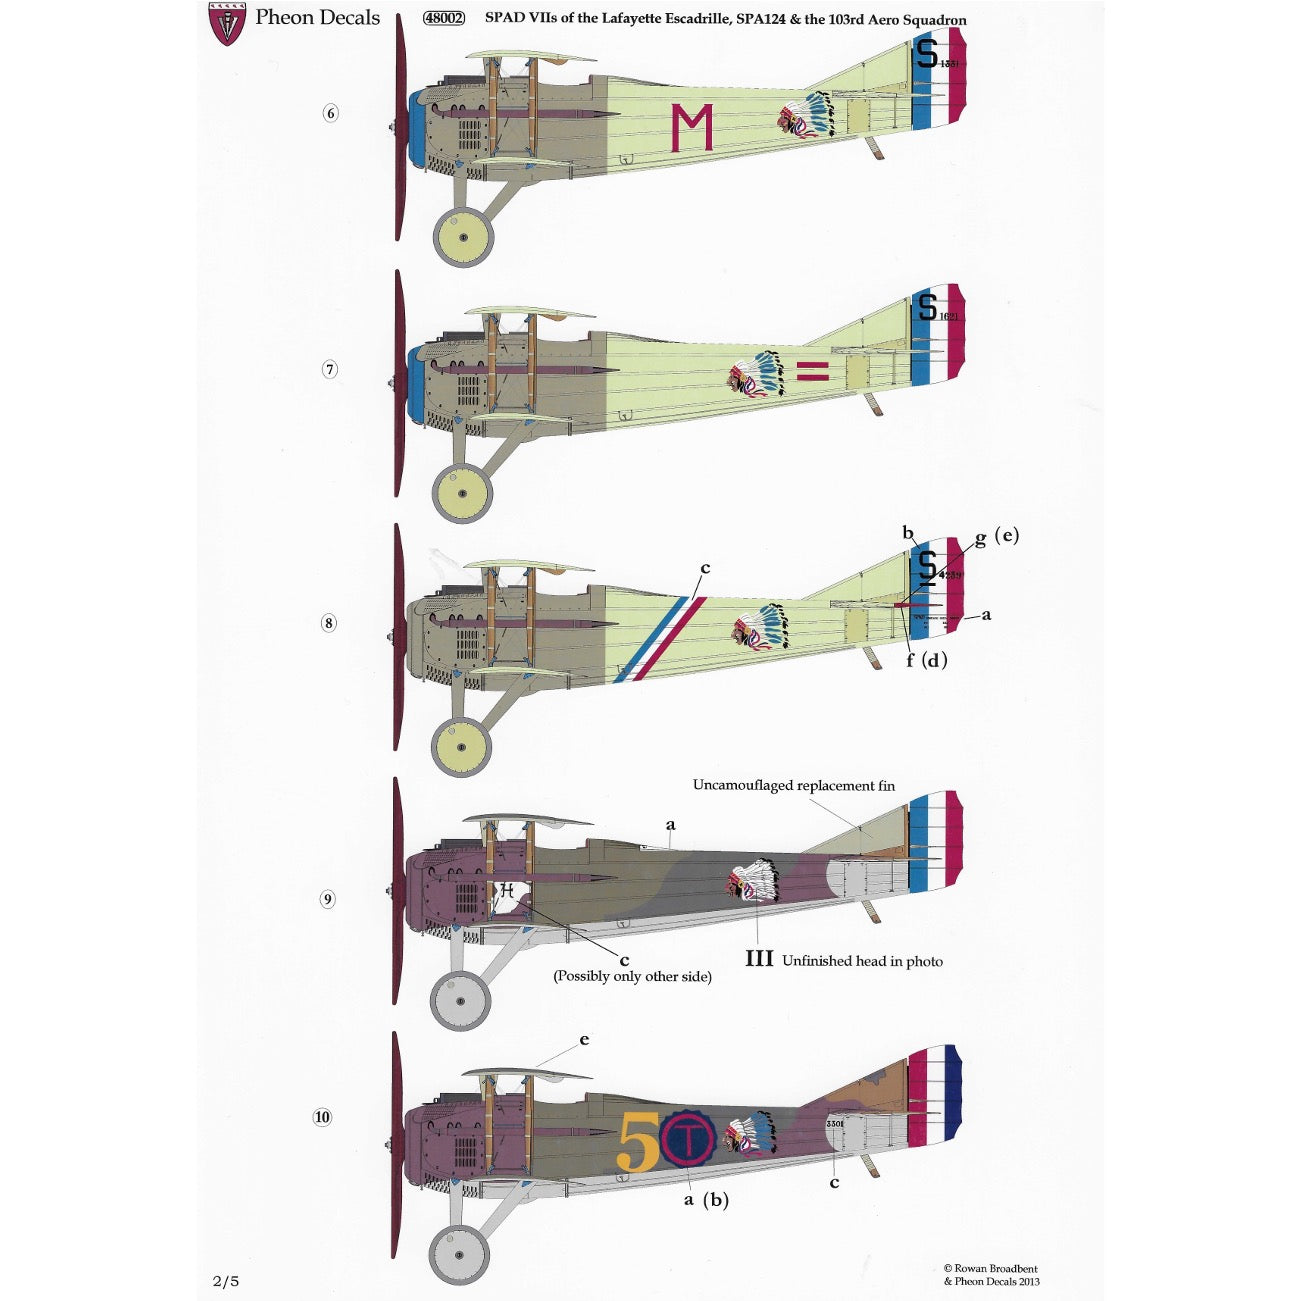 1/48 - SPAD VIIs of the Lafayette, SPA124 & 103rd Aero Sqn USAS